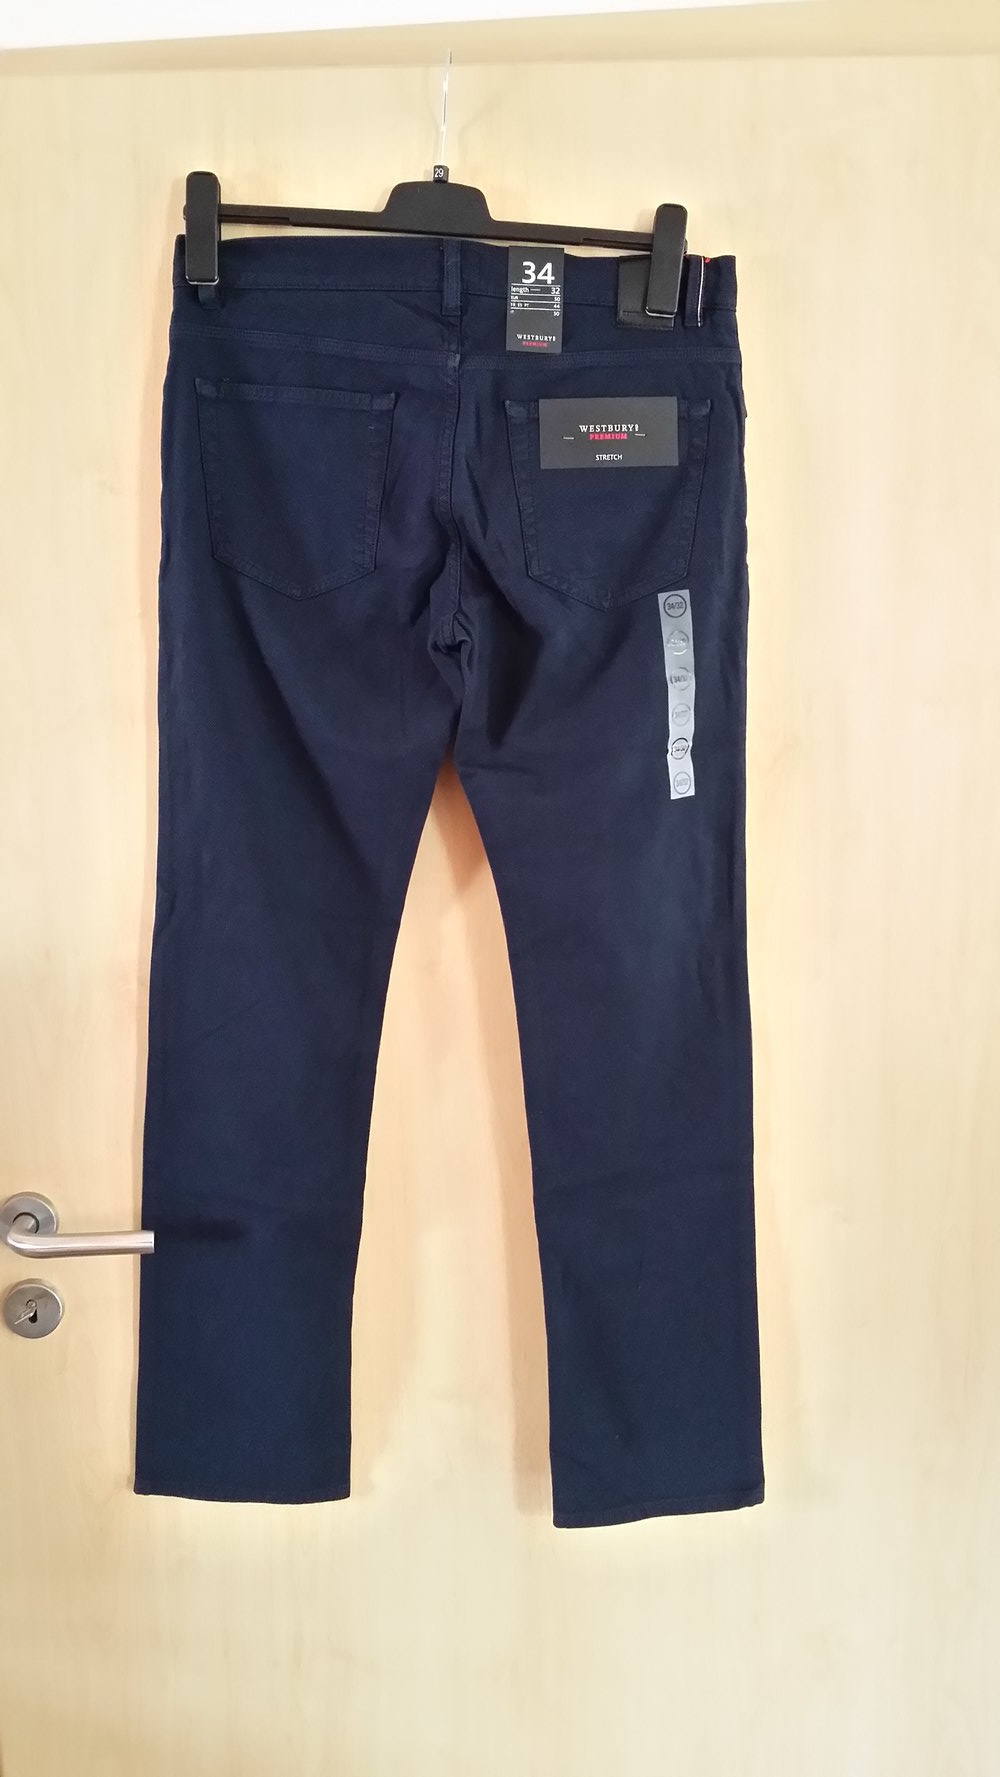 Herren Jeans in Stretch – neu – Größe 34/32 - dunkelblau